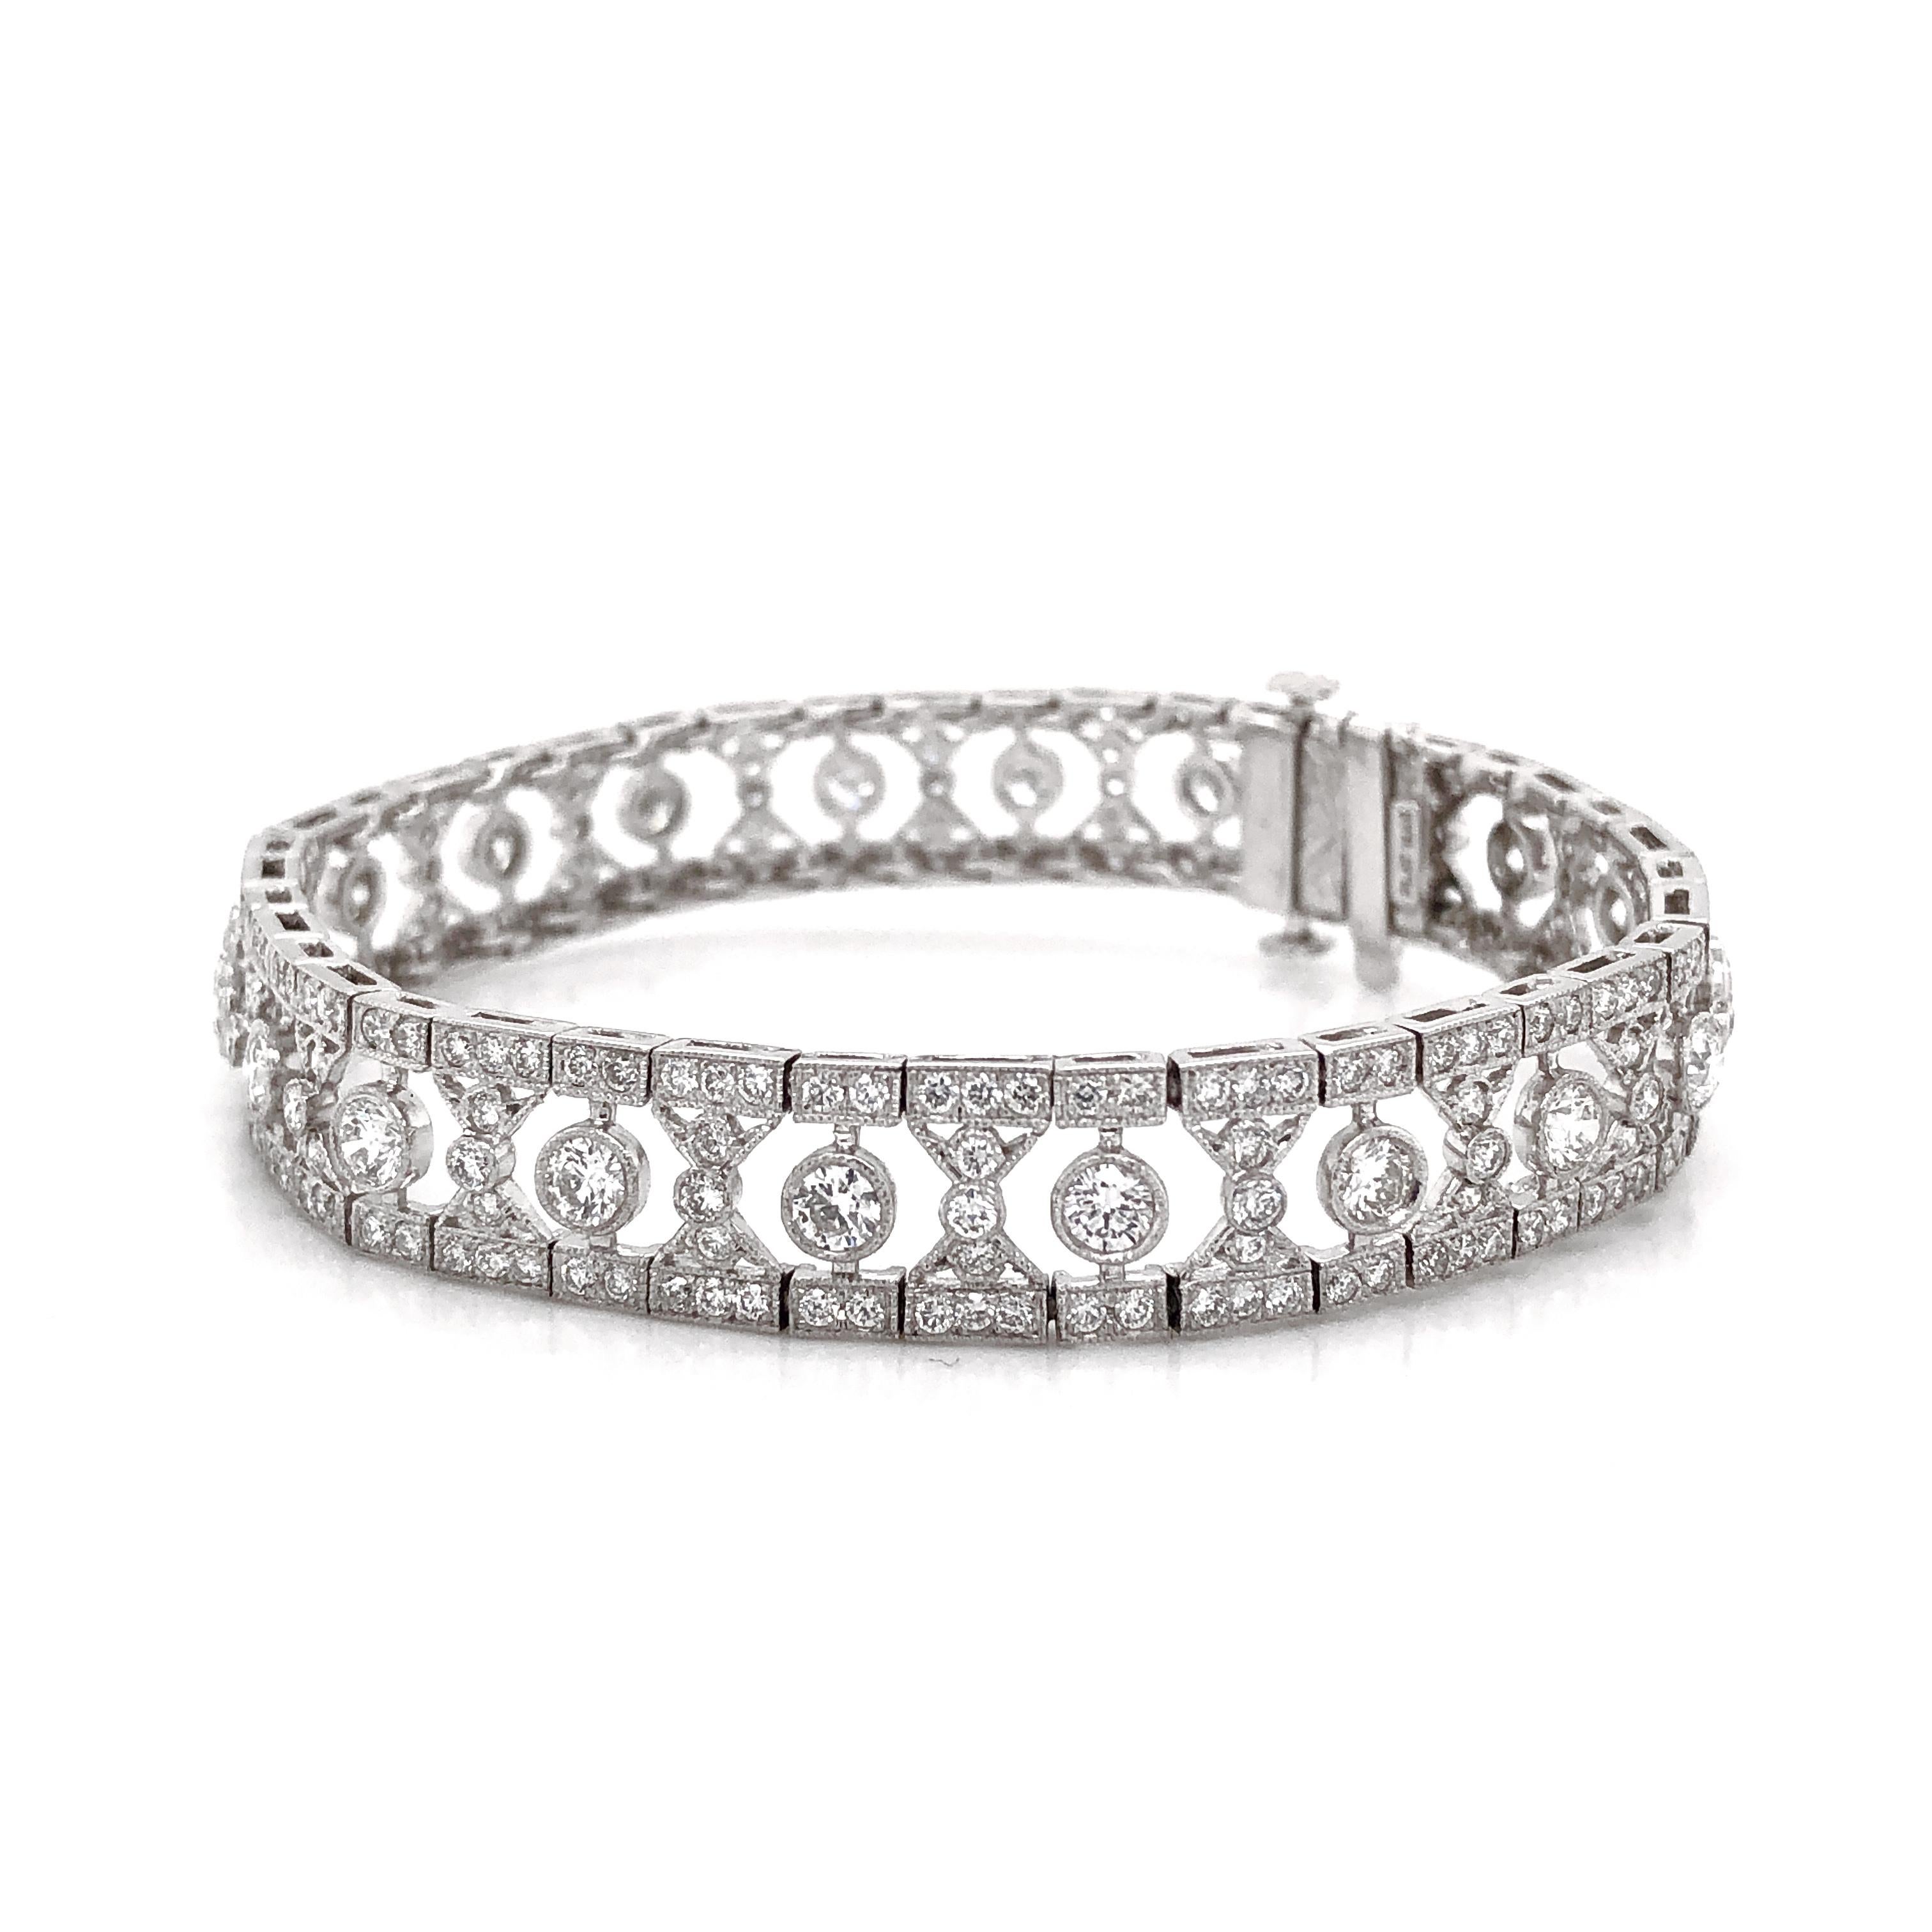 Contemporary Art Deco Inspired Round Cut Diamonds 6.12 Carat Platinum Bracelet For Sale